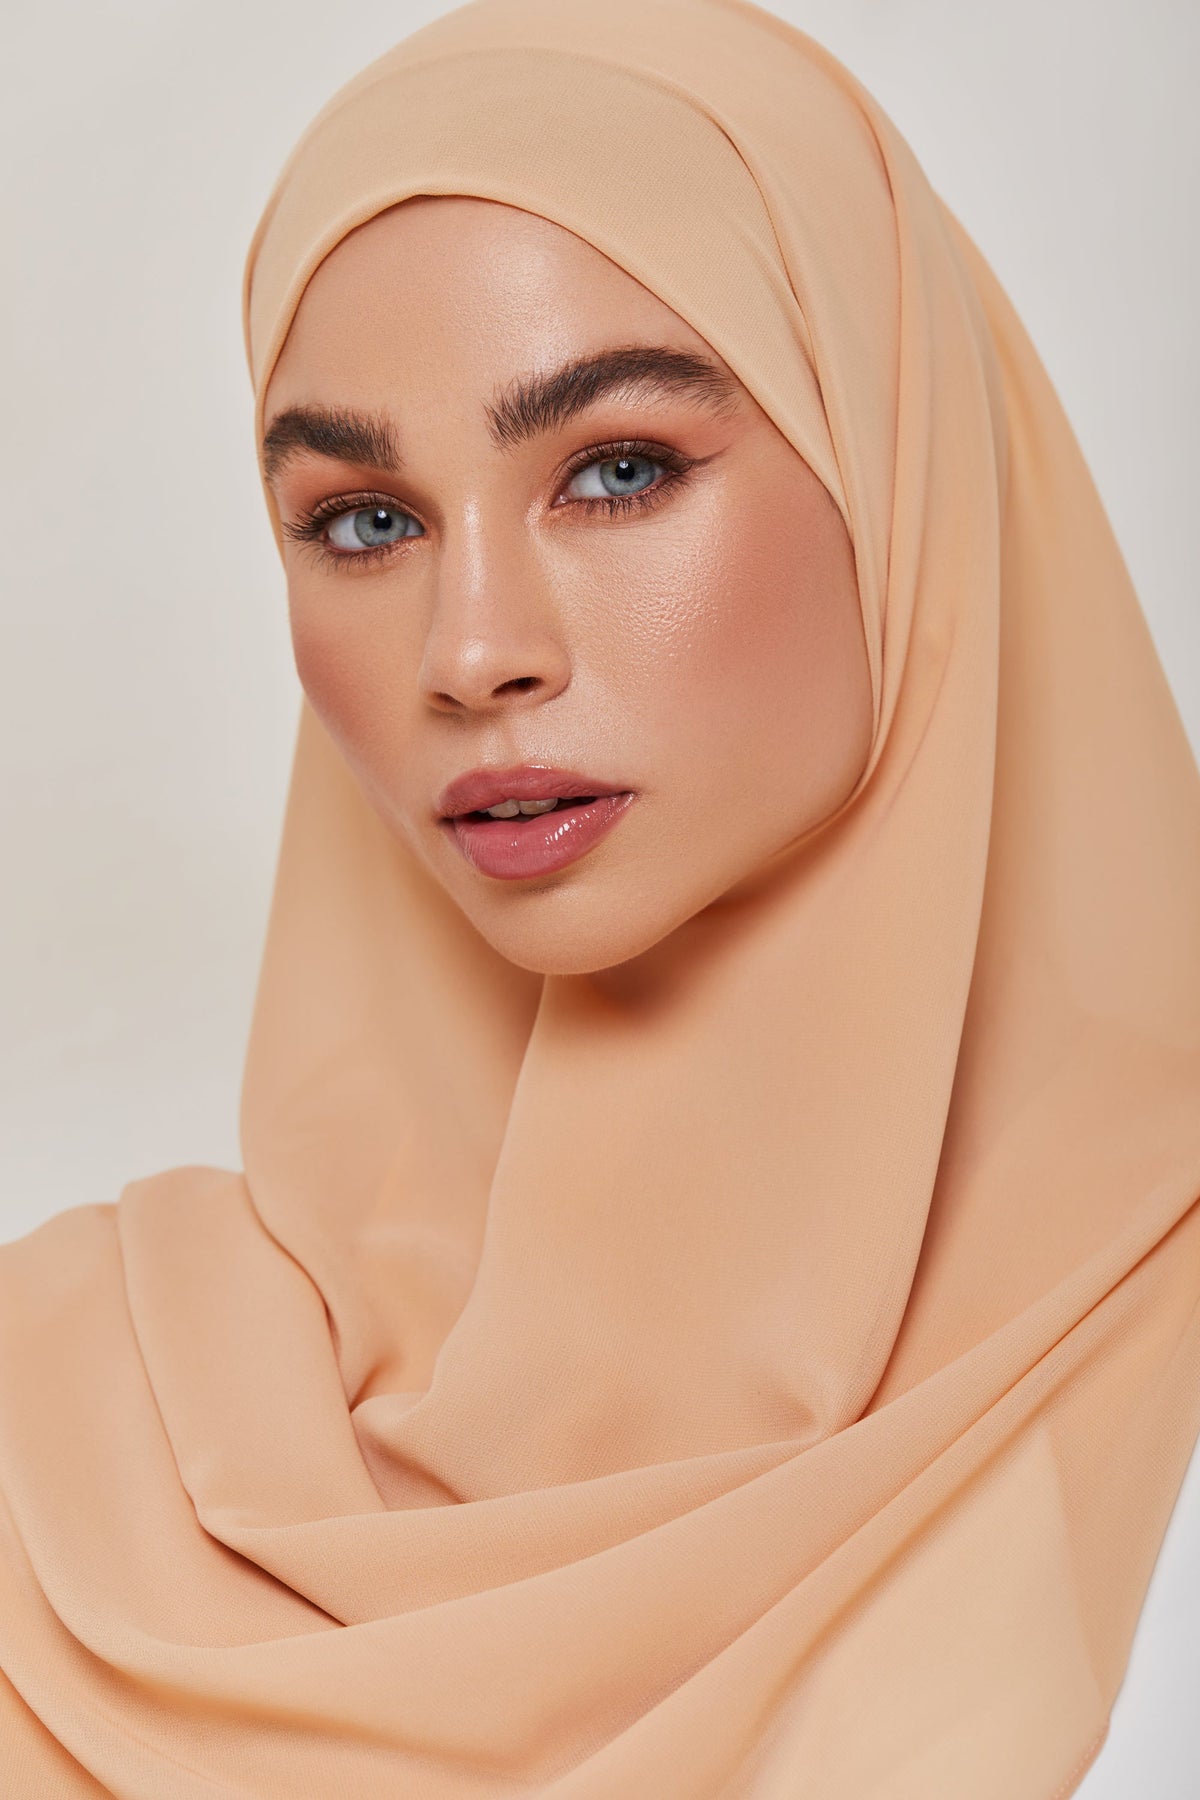 Chiffon LITE Hijab - Bouquet epschoolboard 